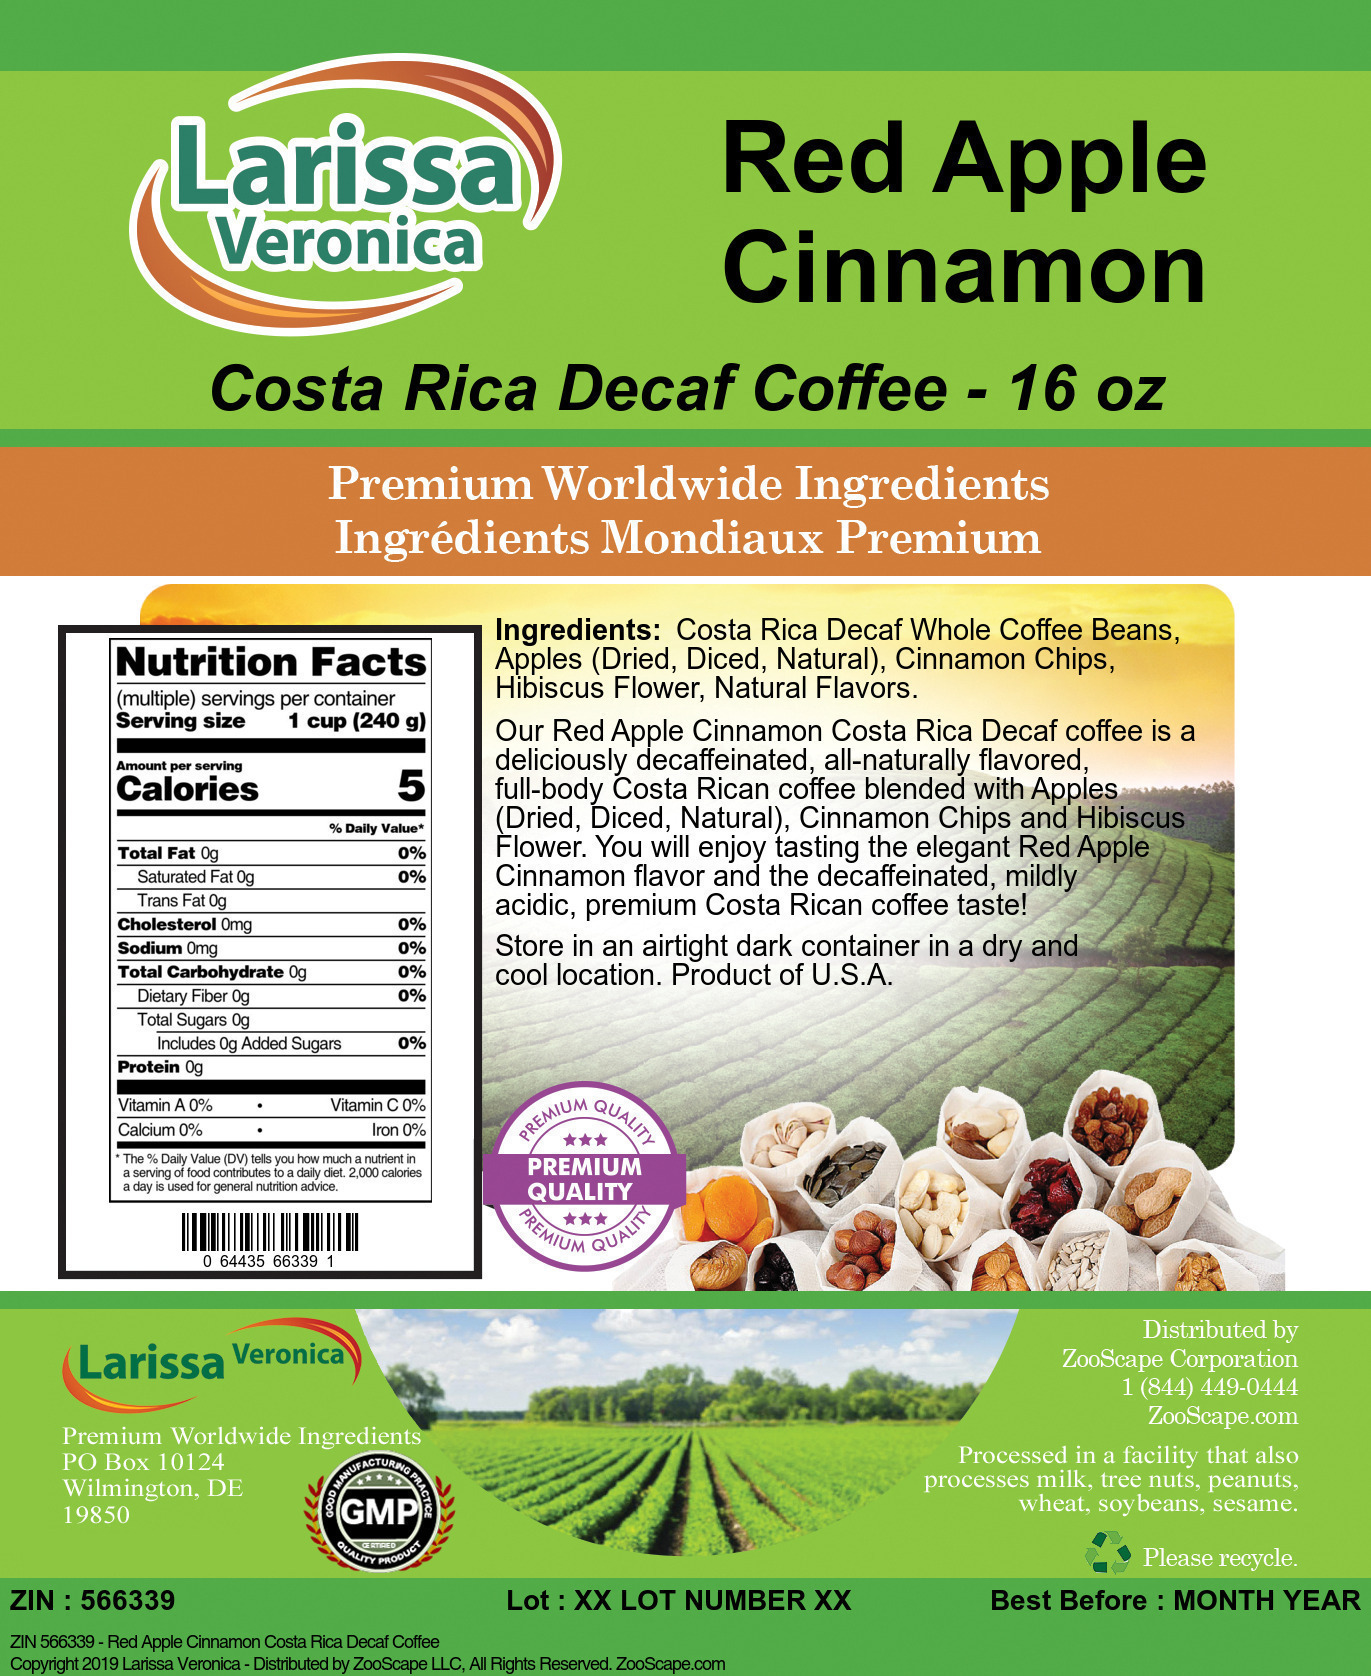 Red Apple Cinnamon Costa Rica Decaf Coffee - Label